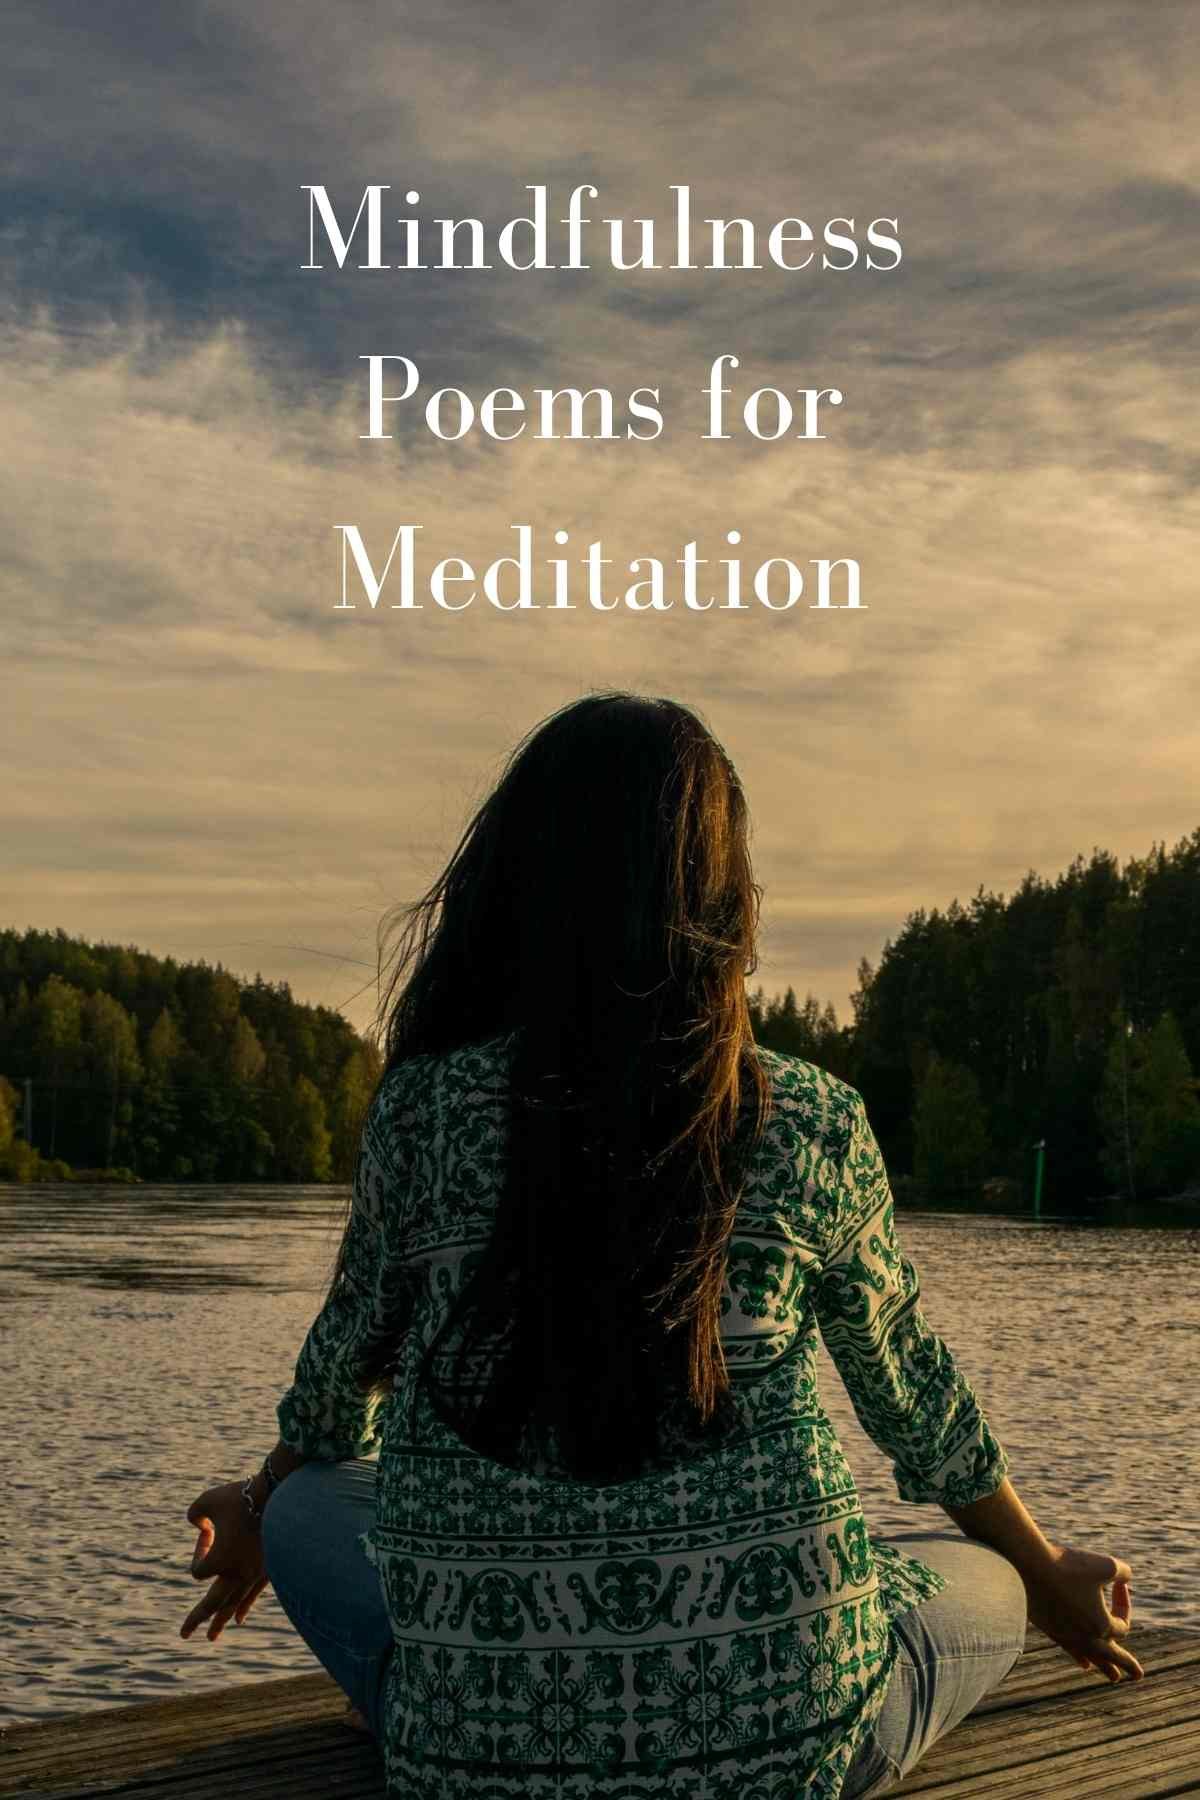 Meditation Poetry